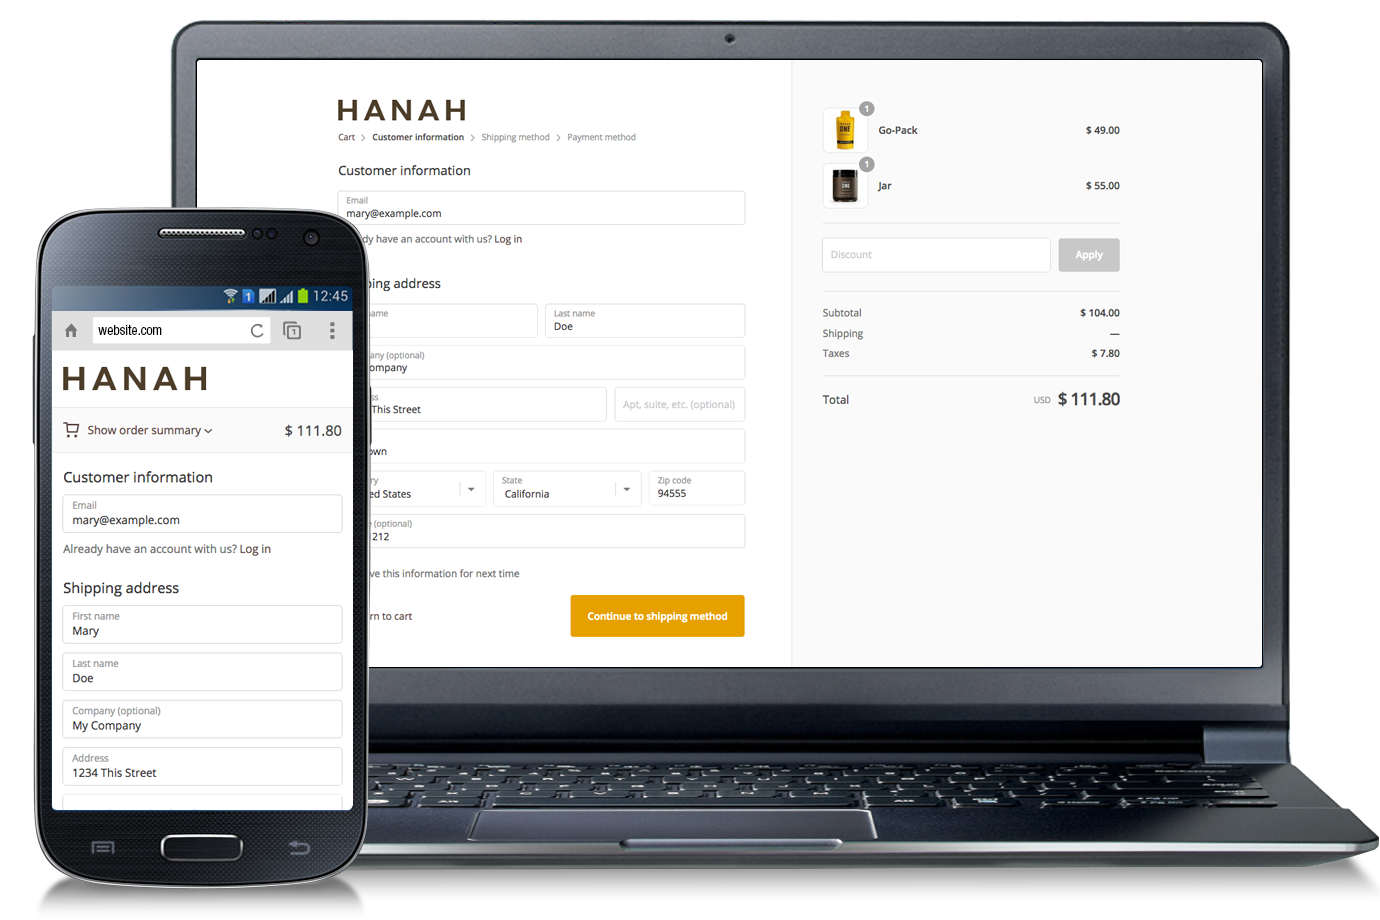 HANAH Life Shopify Website